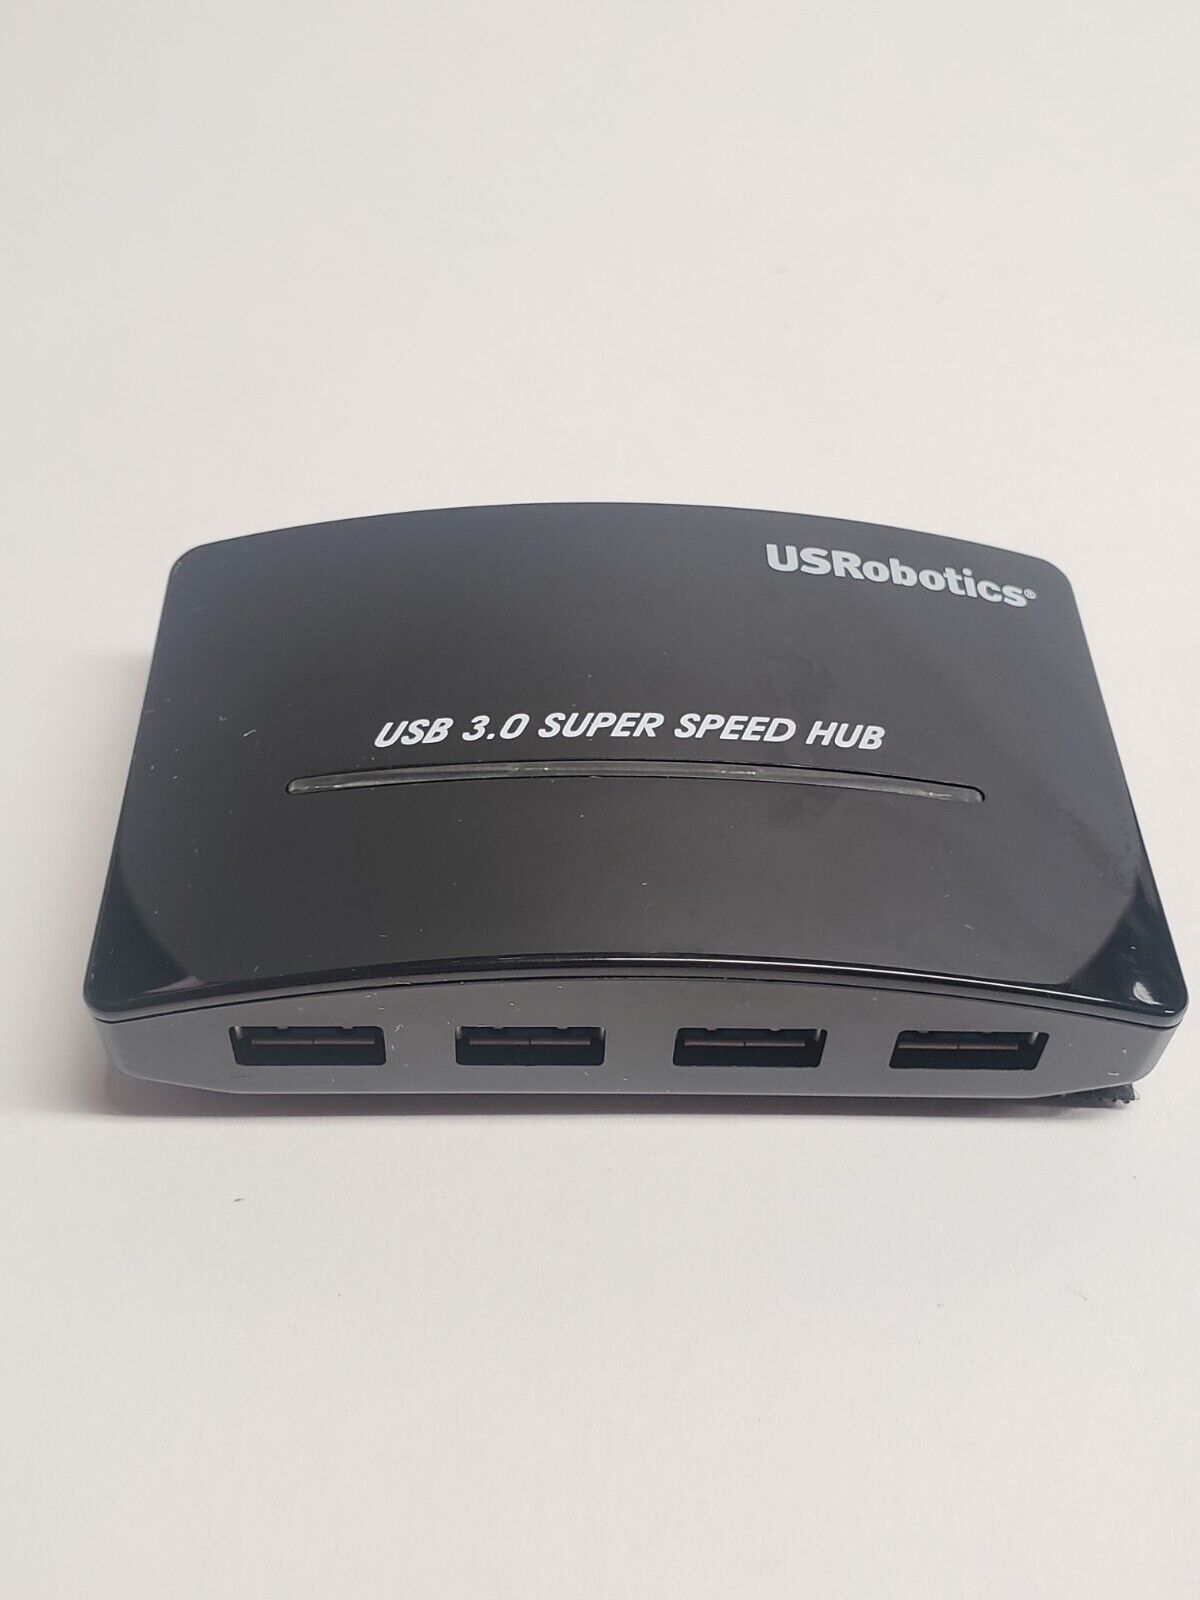 Usrobotics USB 3.0 Super Speed Hub 4 - USB Ports Tested Works Great Ships USA 